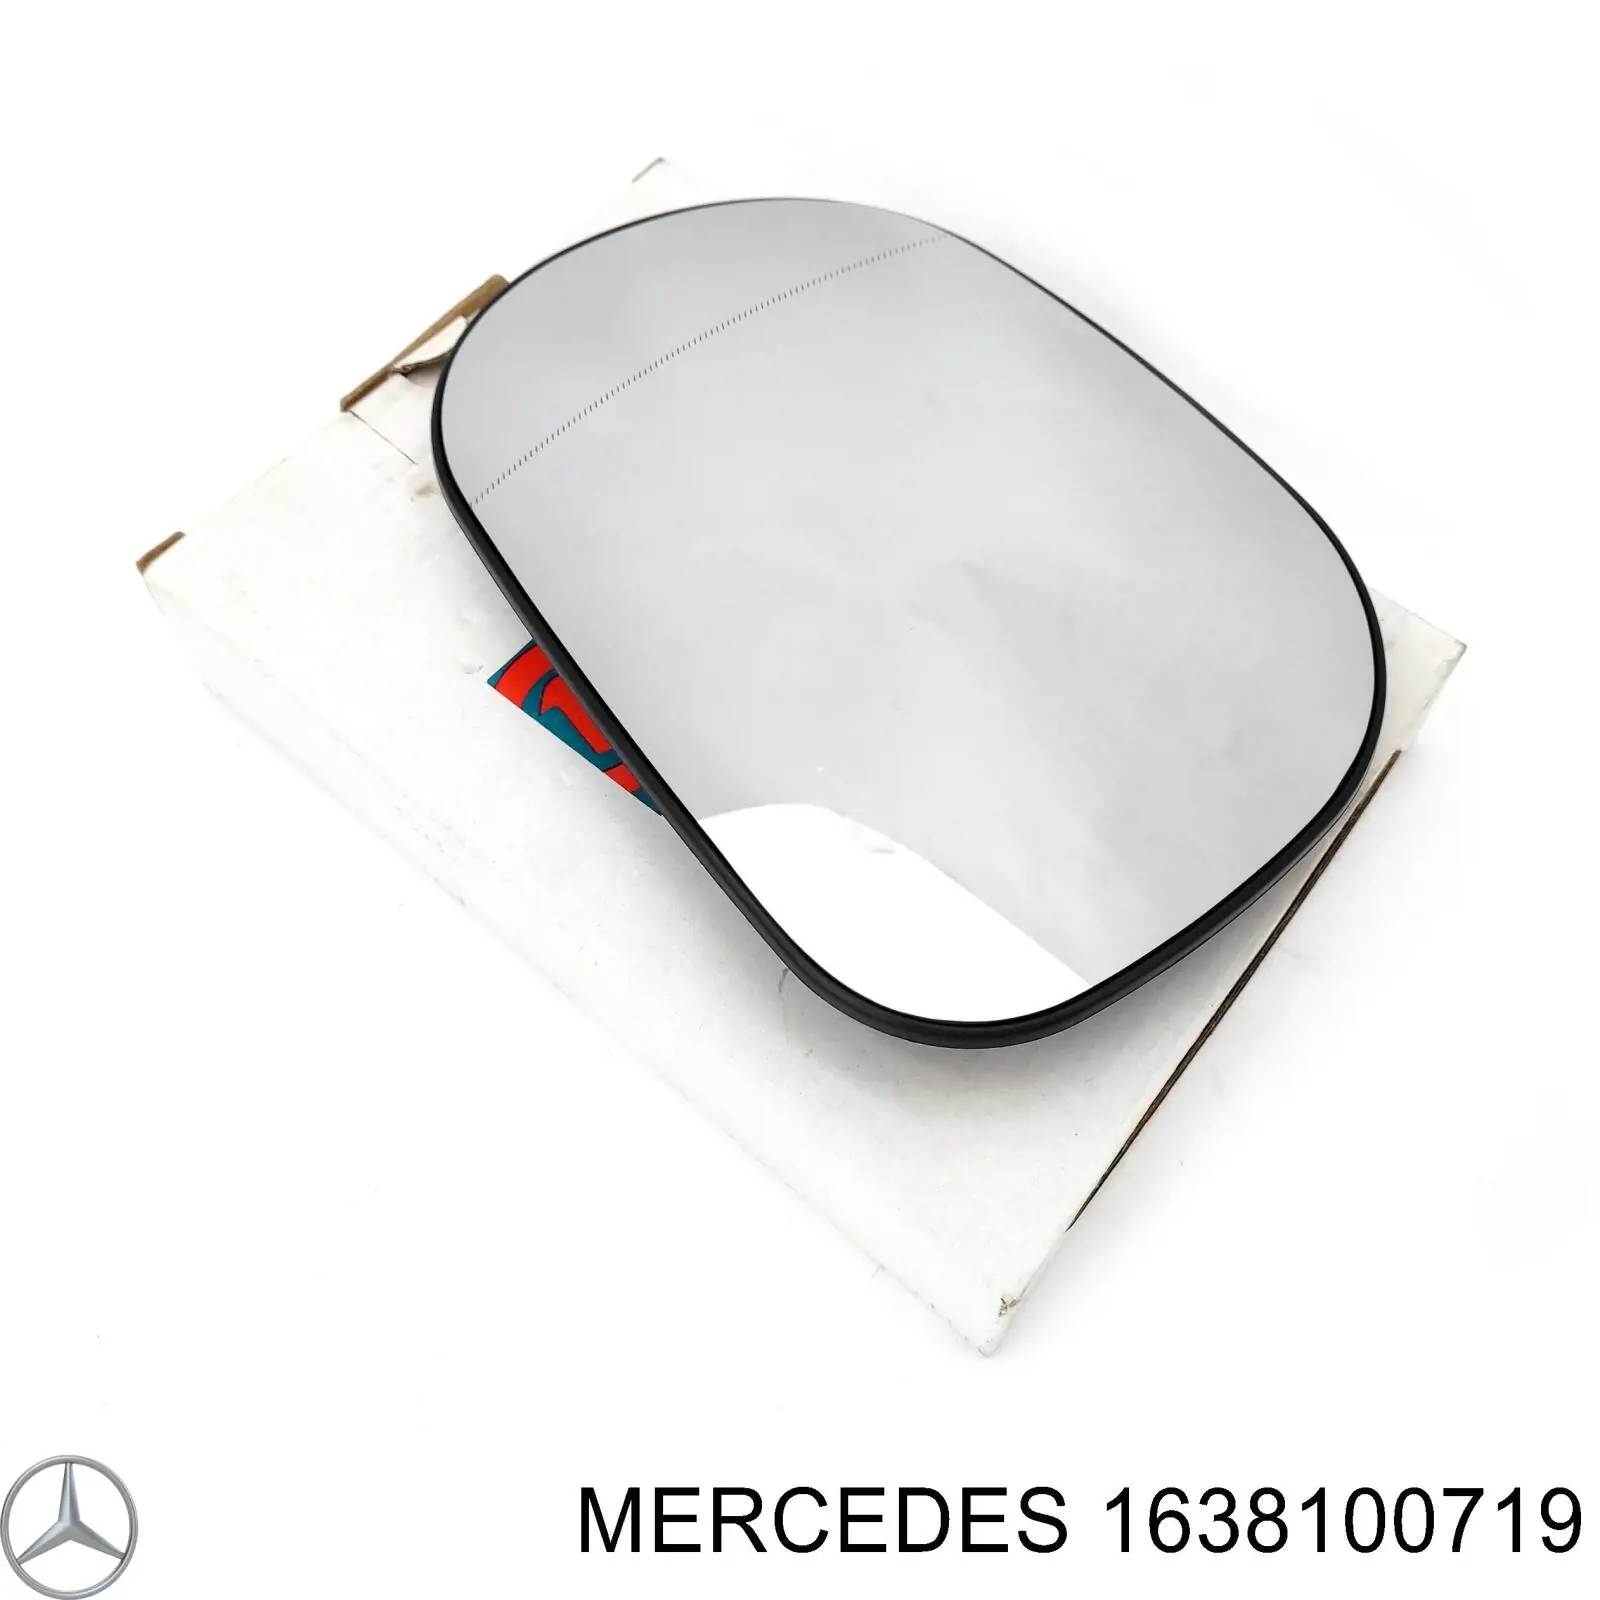 1638100719 Mercedes cristal de espejo retrovisor exterior izquierdo